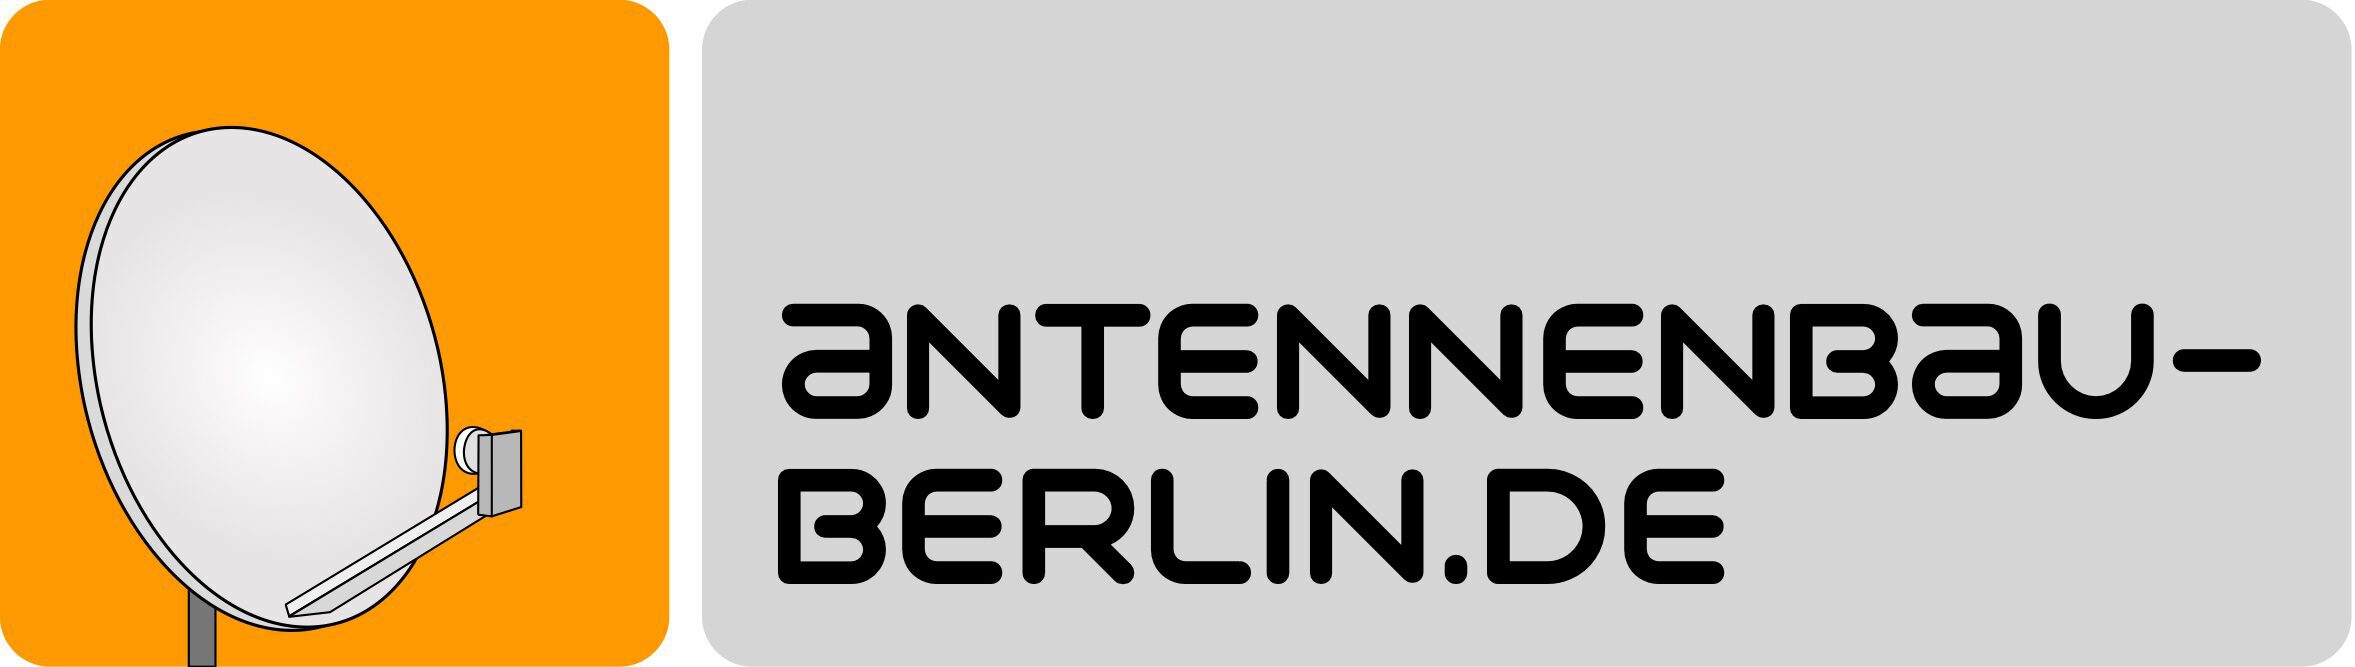 Antennenbau Berlin